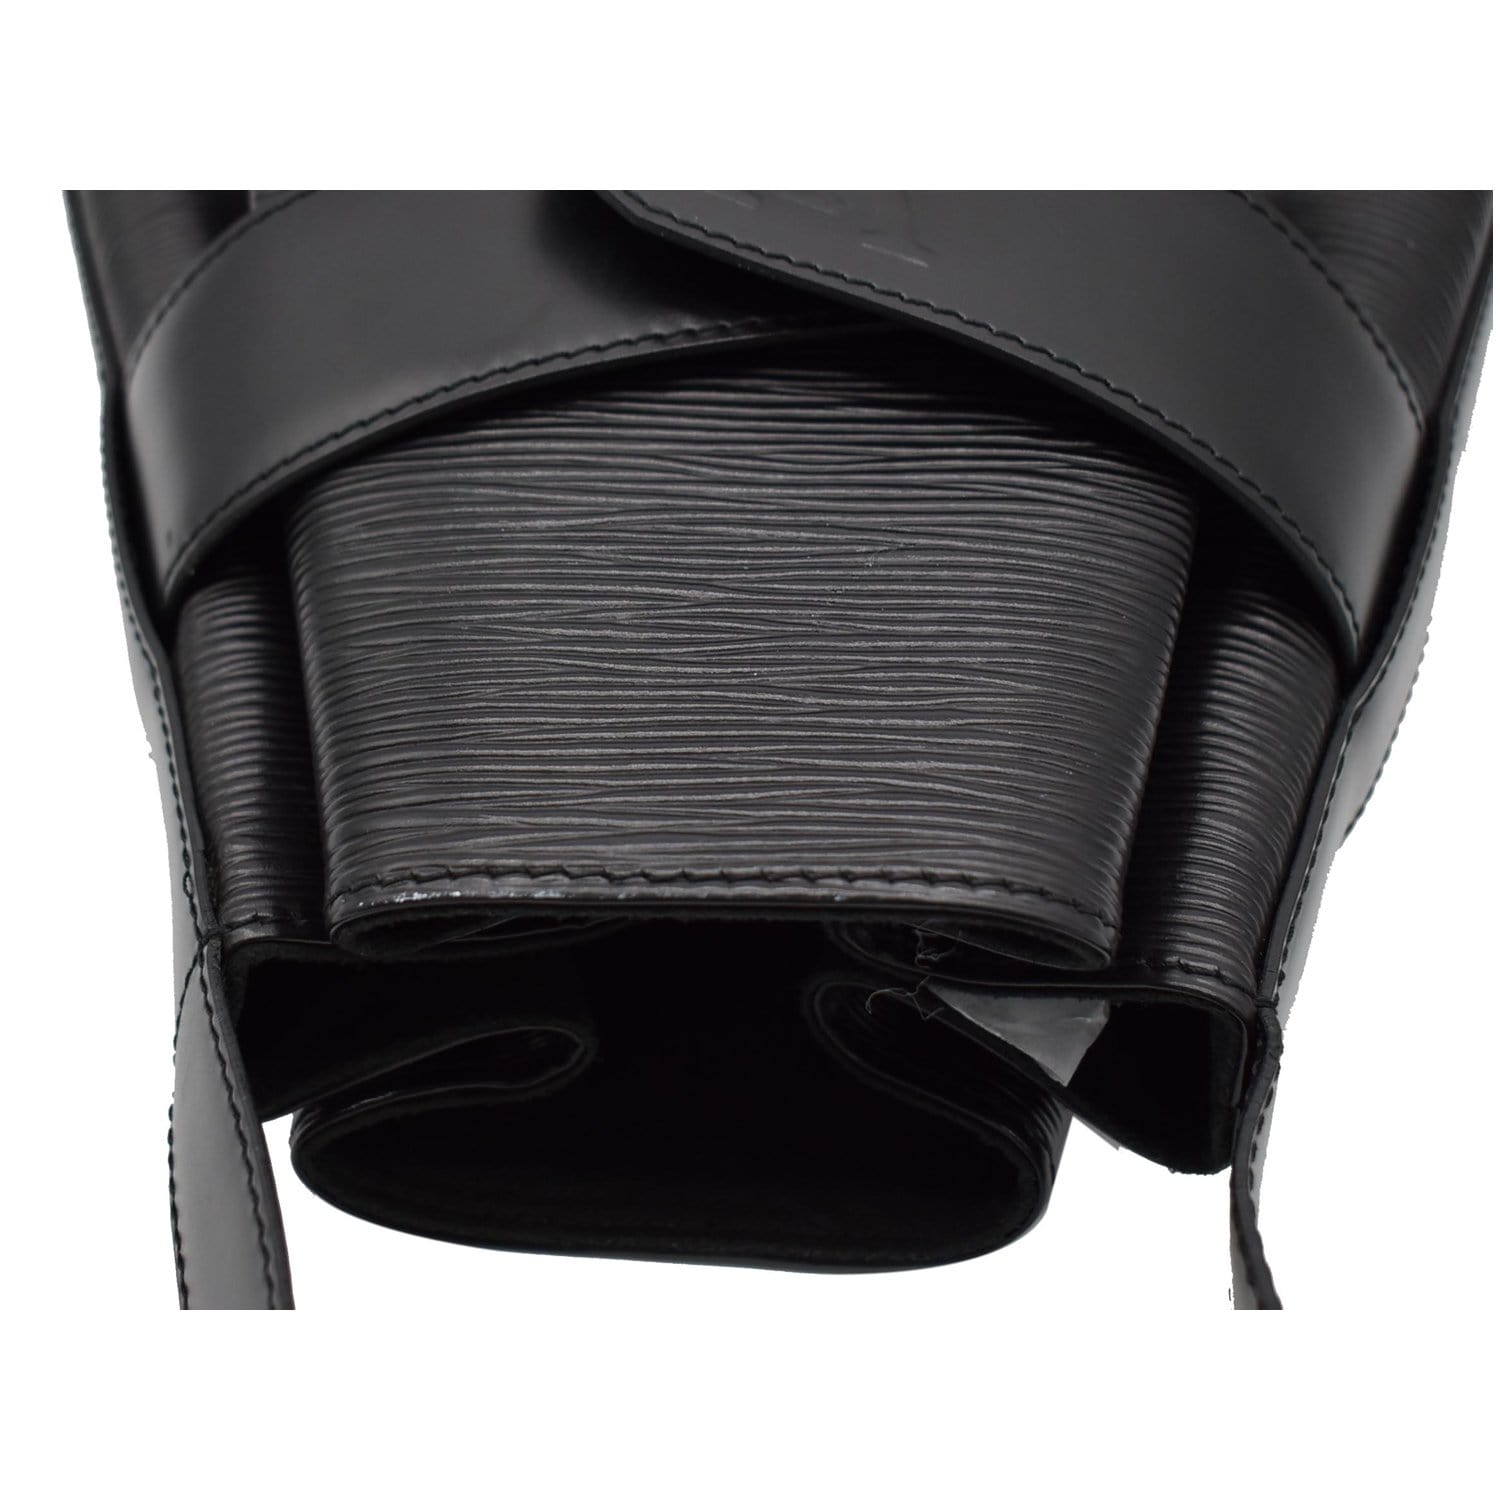 LOUIS VUITTON Shoulder Bag M80155 Sac DePaul GM Epi Leather Black